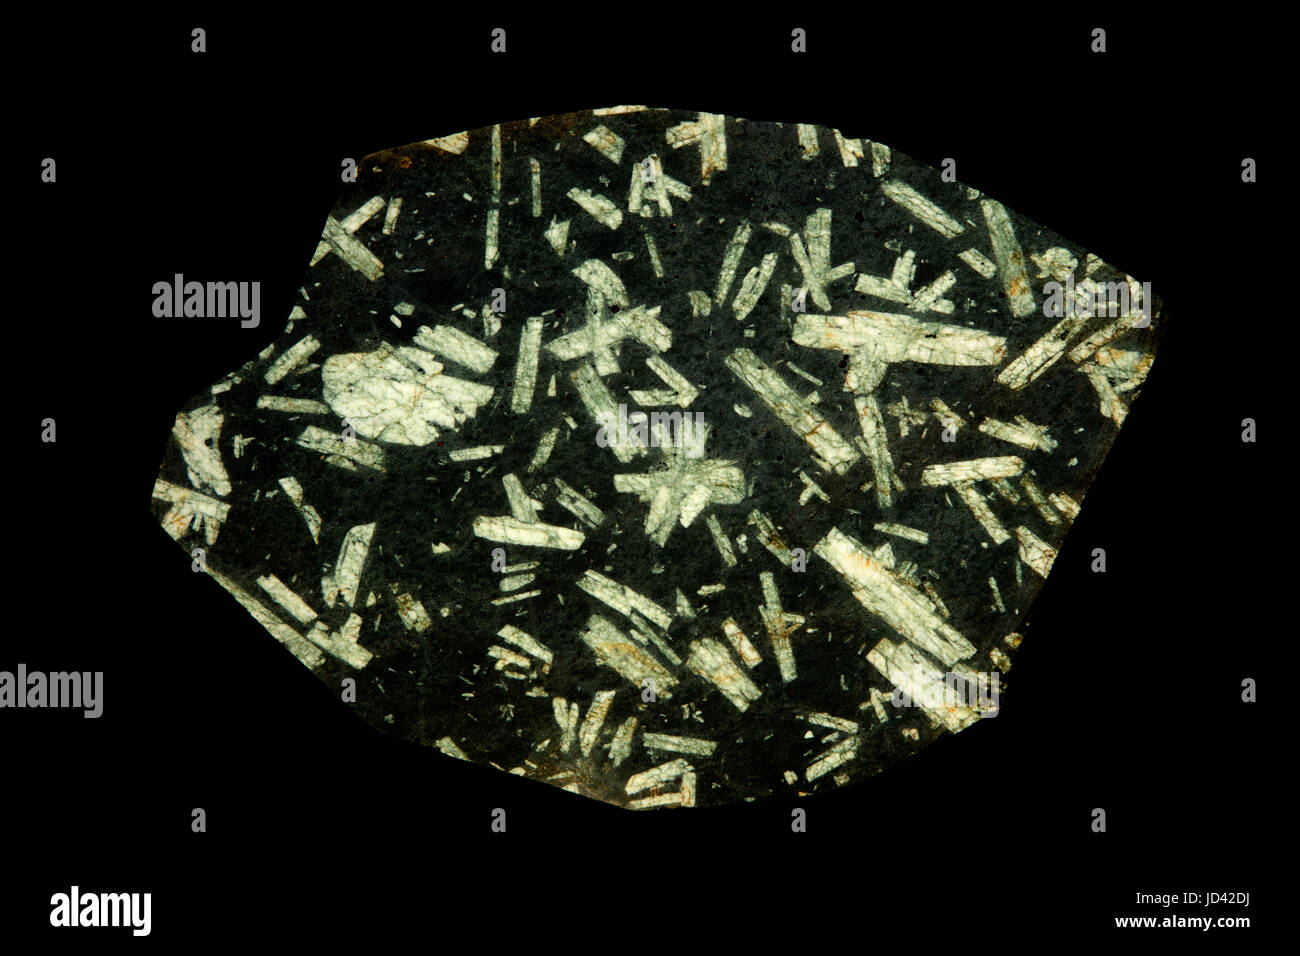 basalt porphry with feldspar phenocrysts, 'Chinese writing stone', California, igneous rock Stock Photo